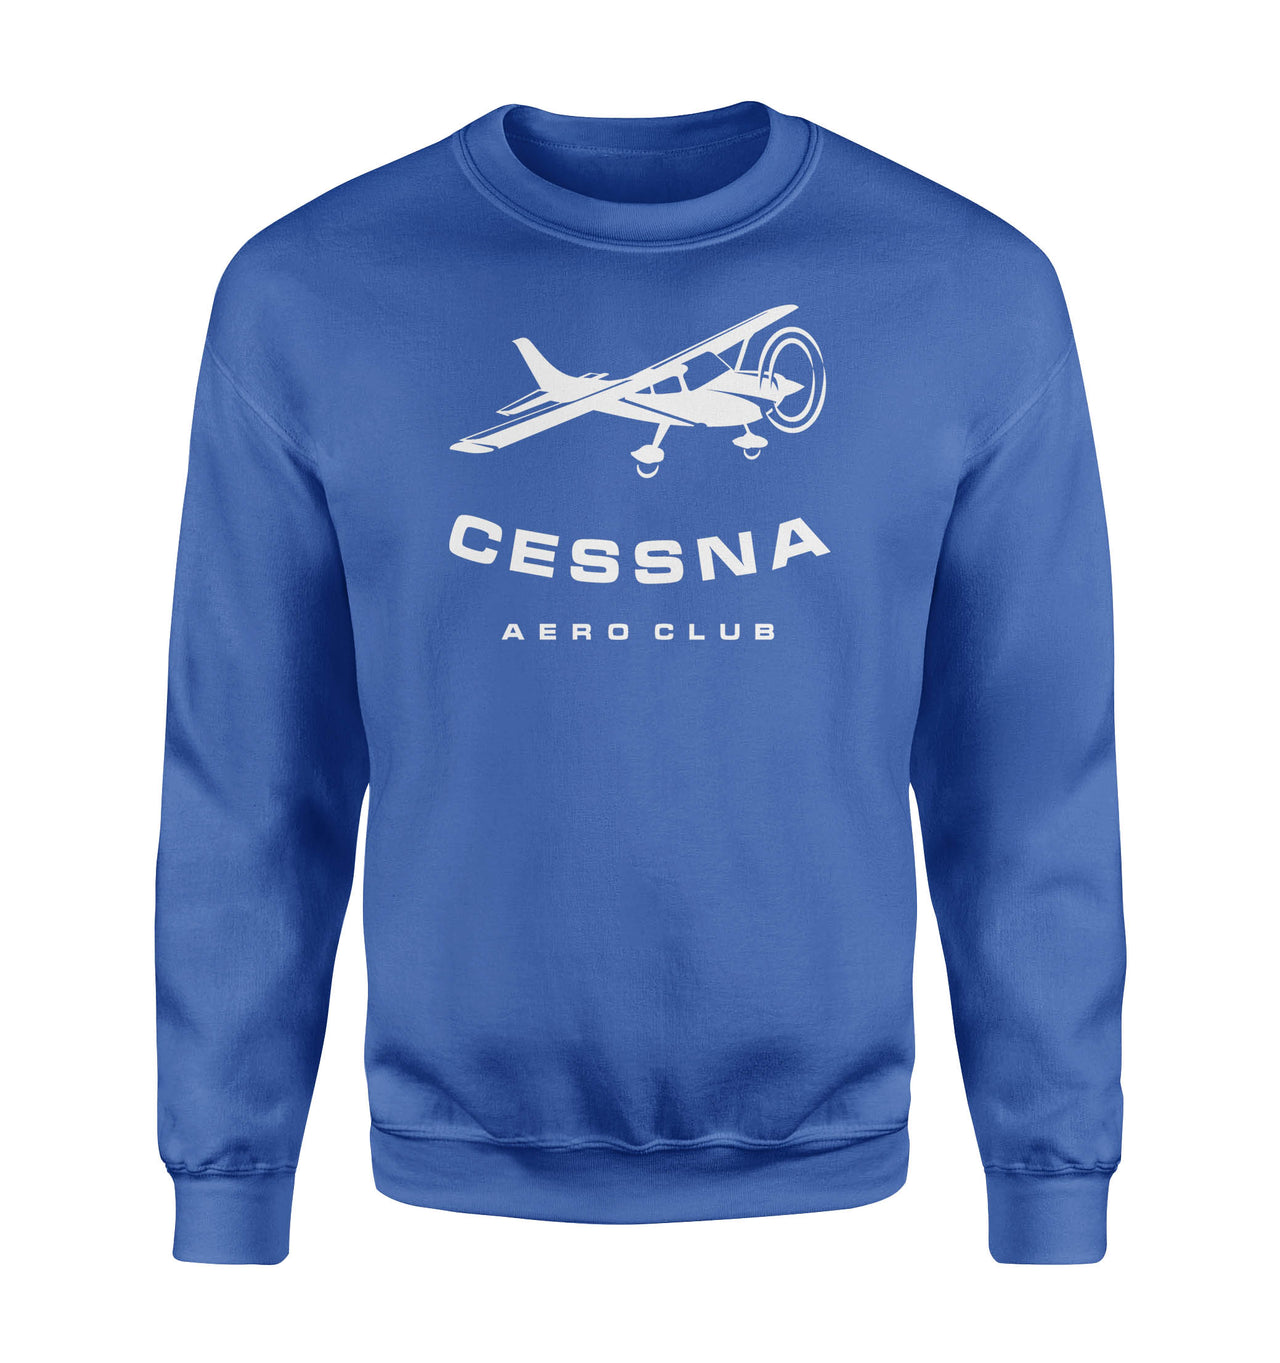 Cessna Aeroclub Designed Sweatshirts